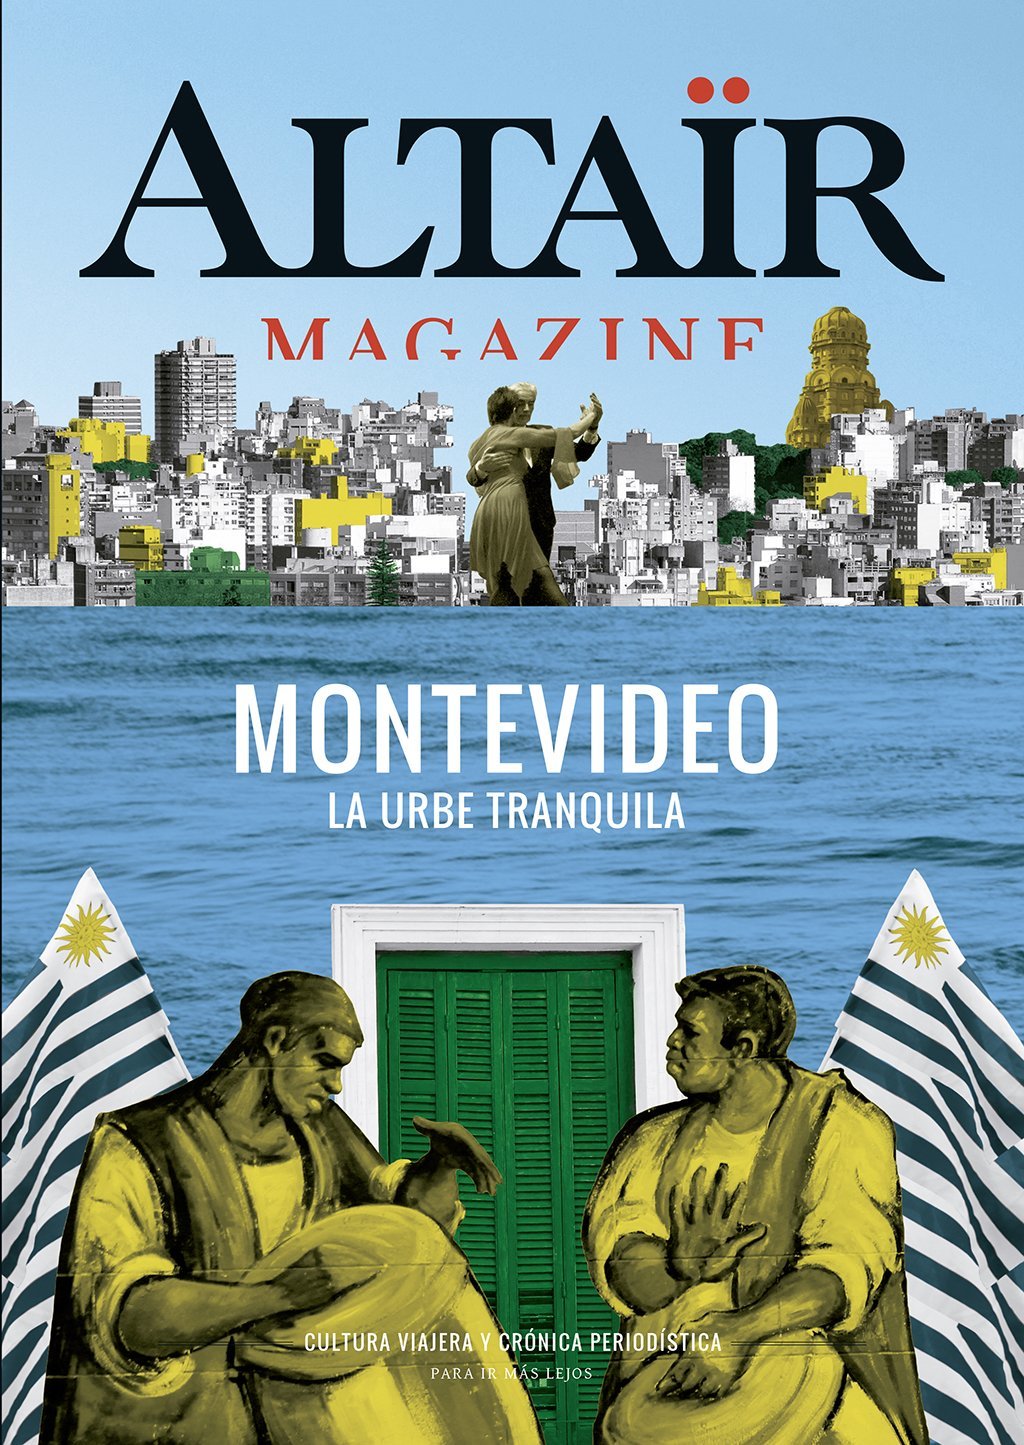 Altaïr Magazine #3 Montevideo. La urbe tranquila